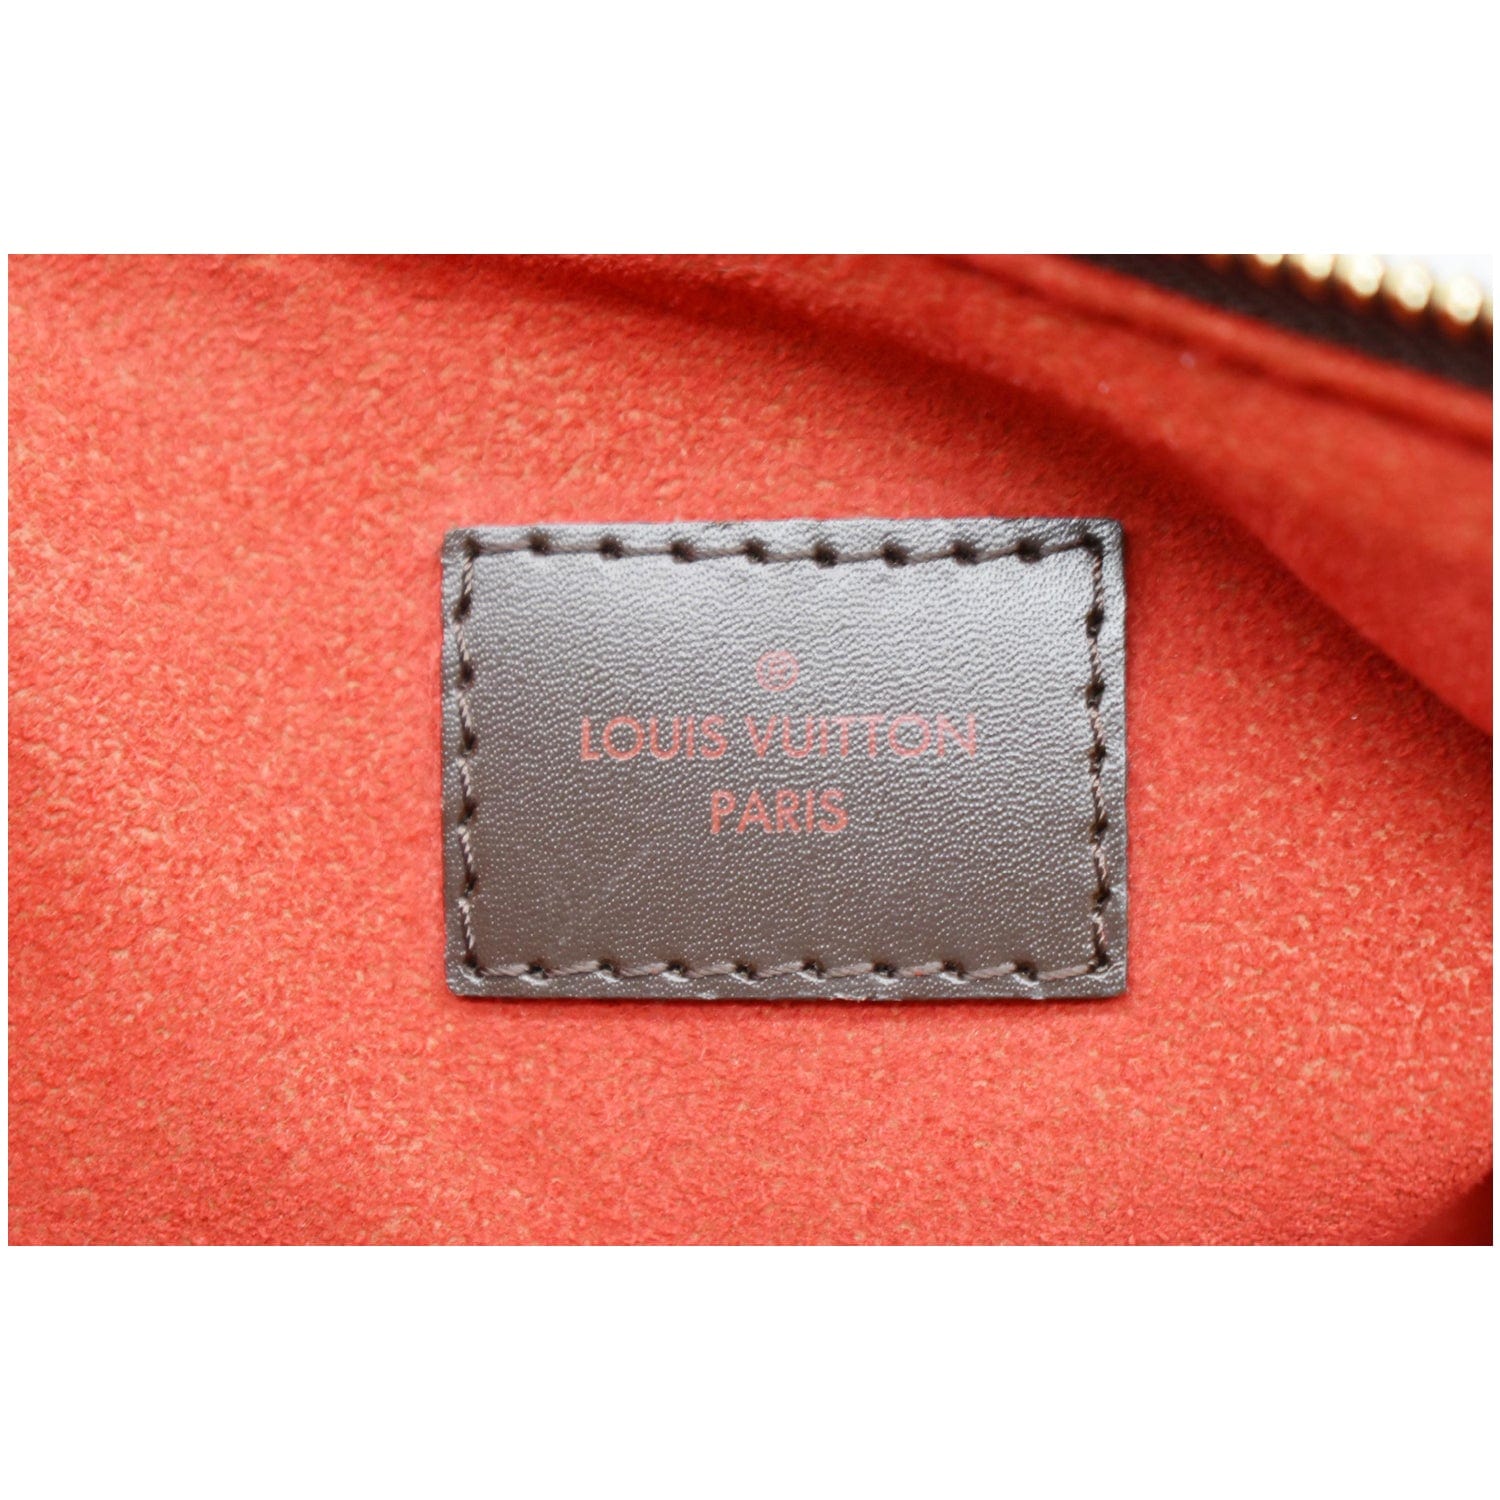 Louis Vuitton Evora Damier MM ไซส์กลางกำลังดีค่า สภาพใหม่ พร้อม